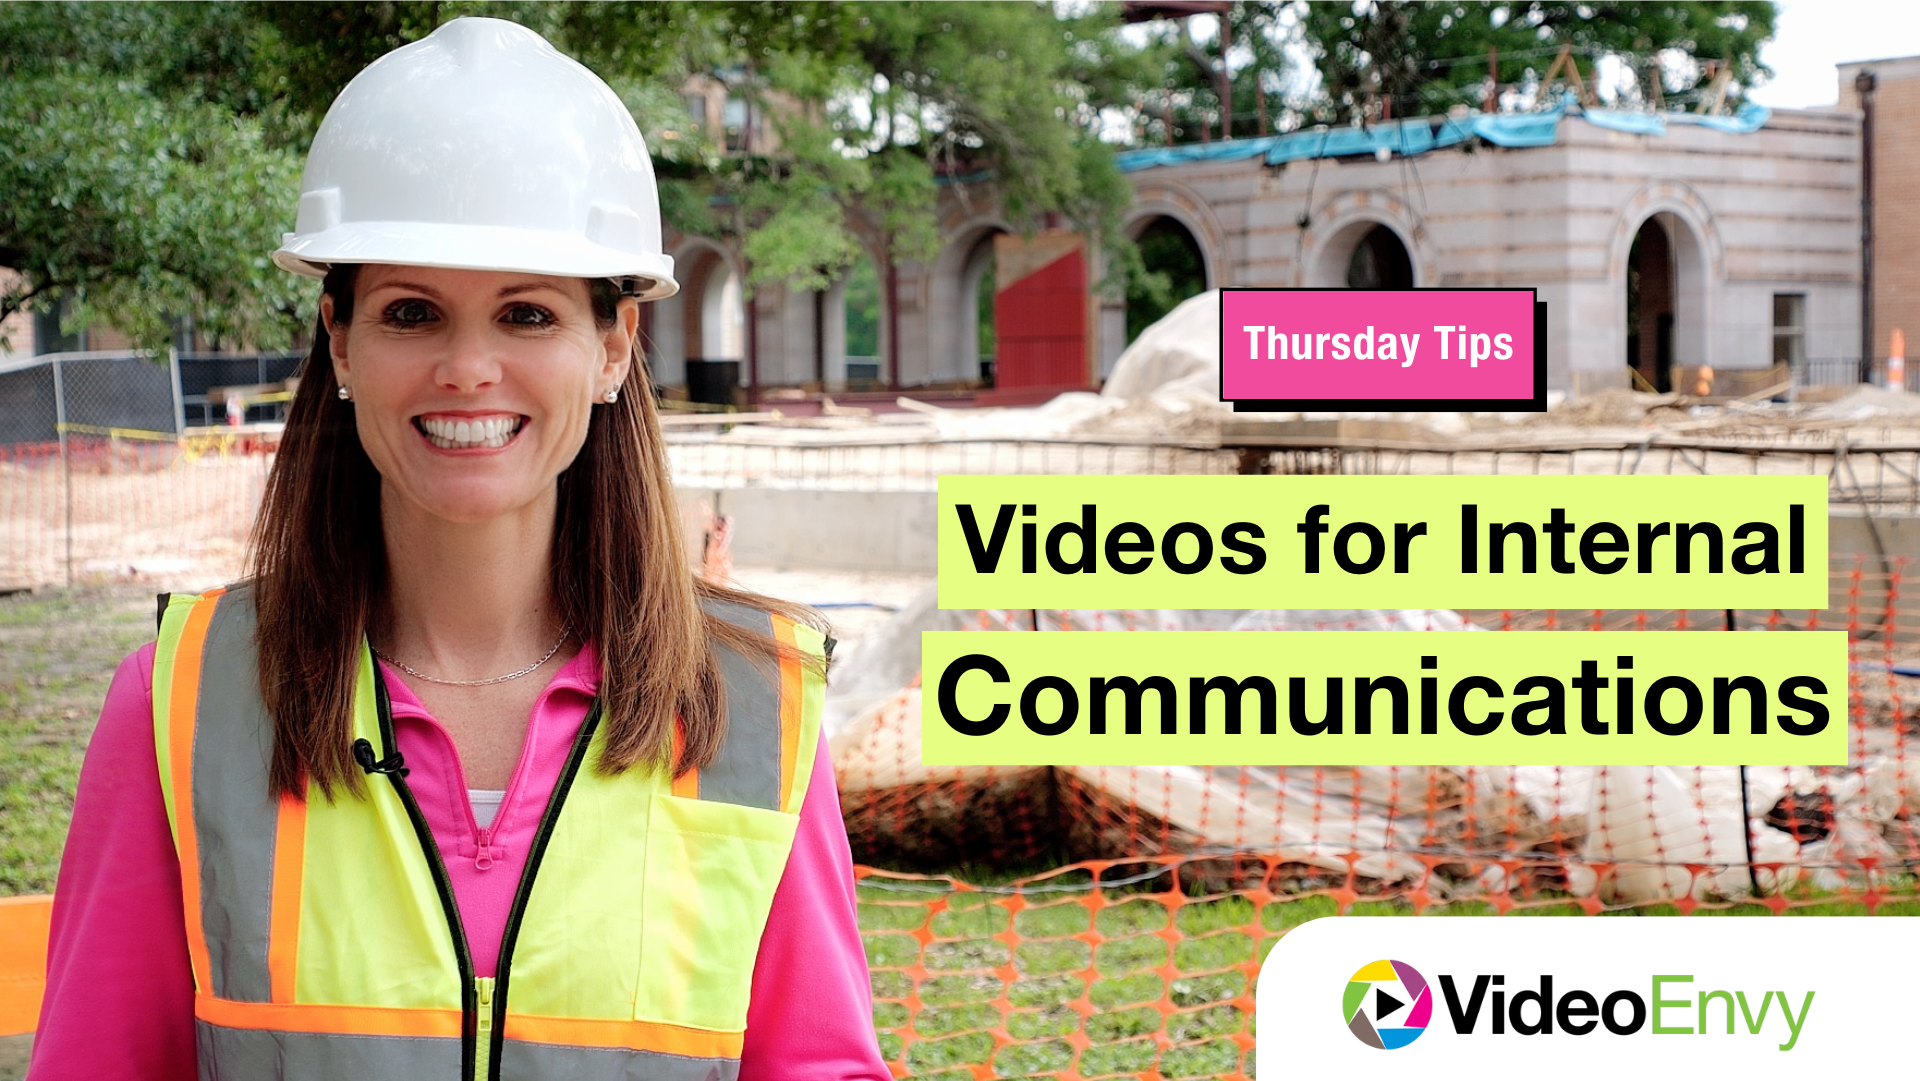 Thursday Tips: Using Video for Internal Communications